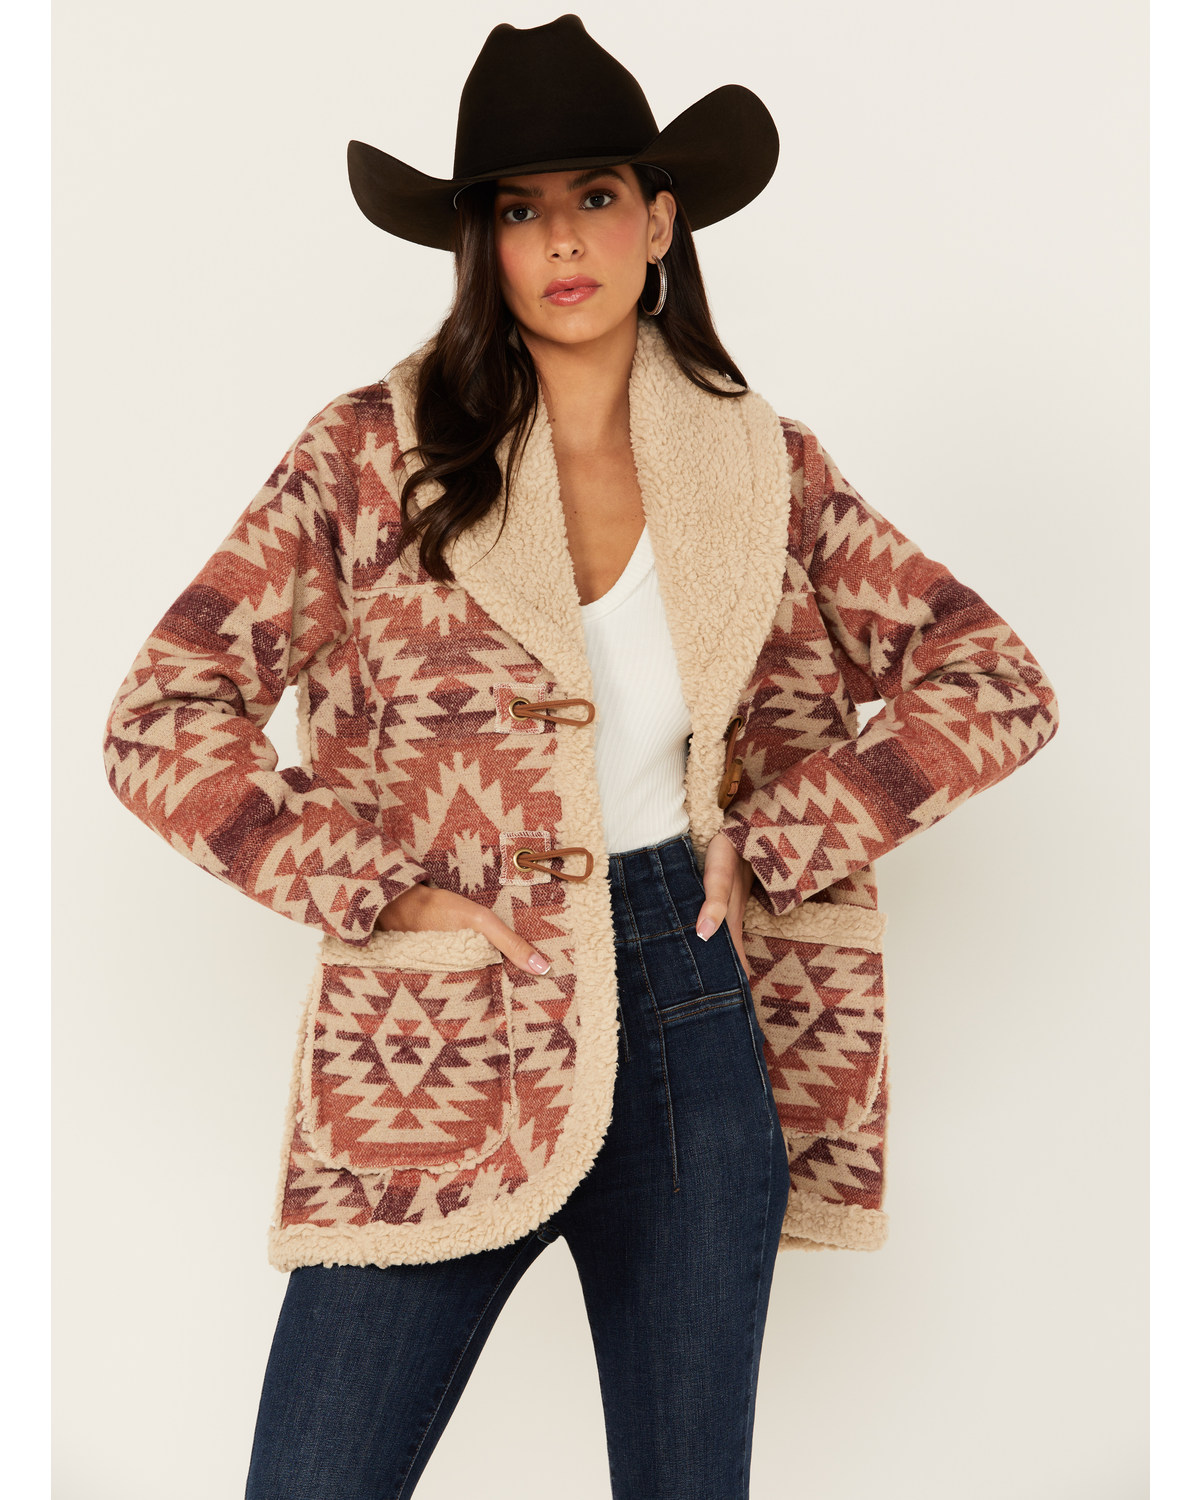 Cotton & Rye Women's Southwestern Print Sherpa Jacket